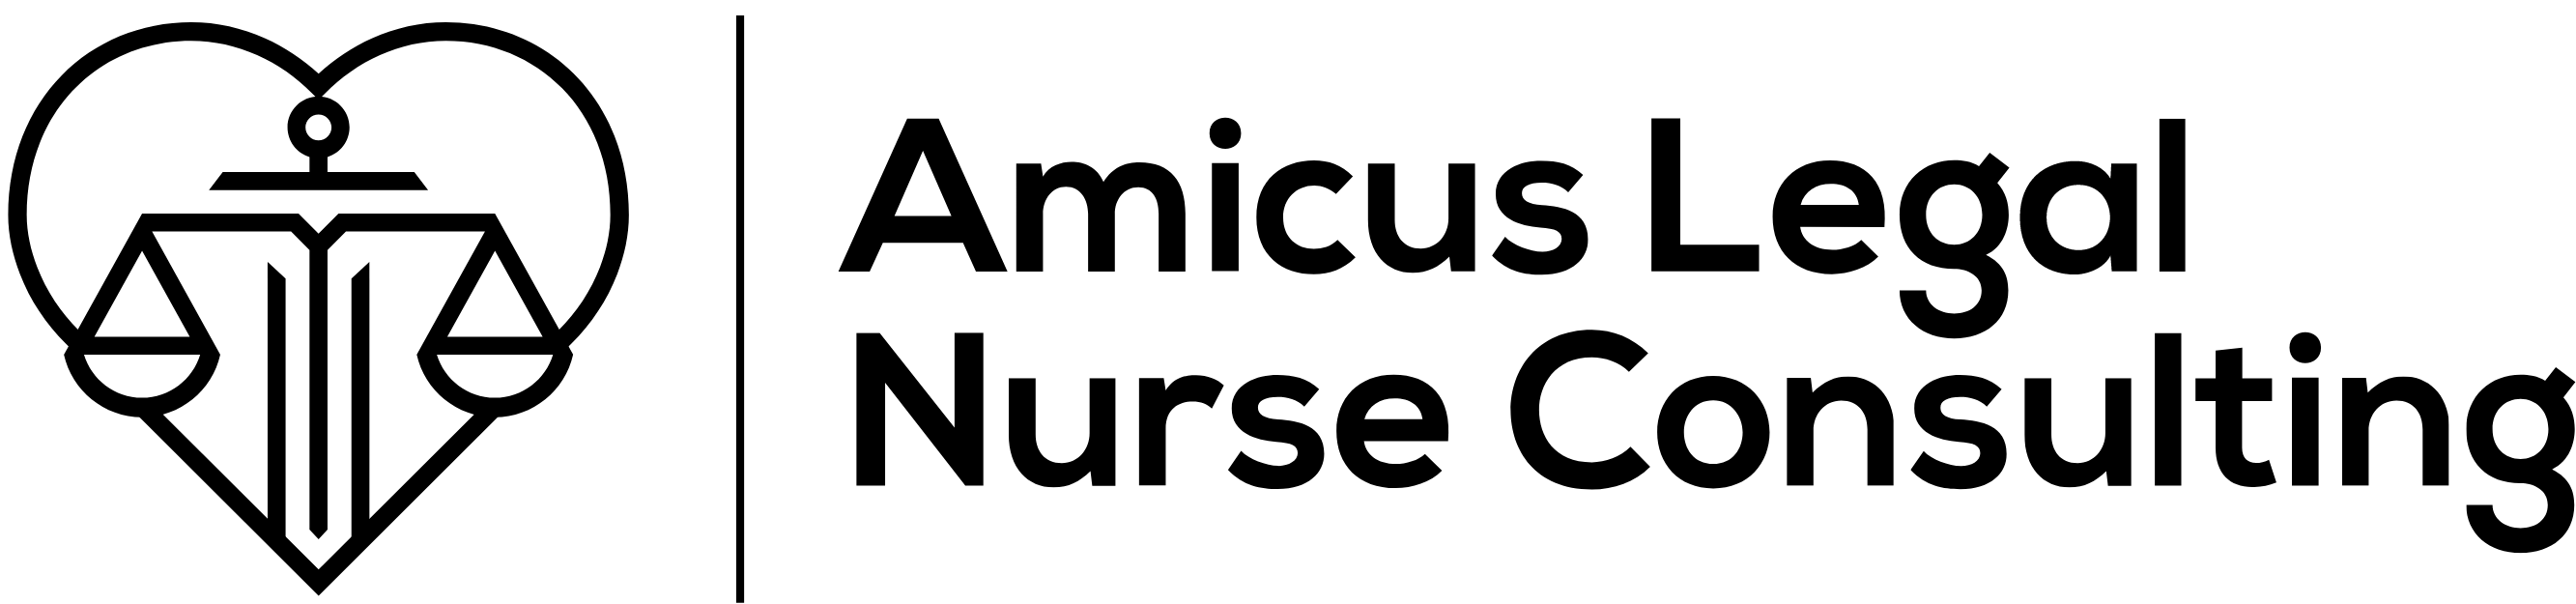 Amicus-LNC-Retina-Logo-2666-×-625-px.png